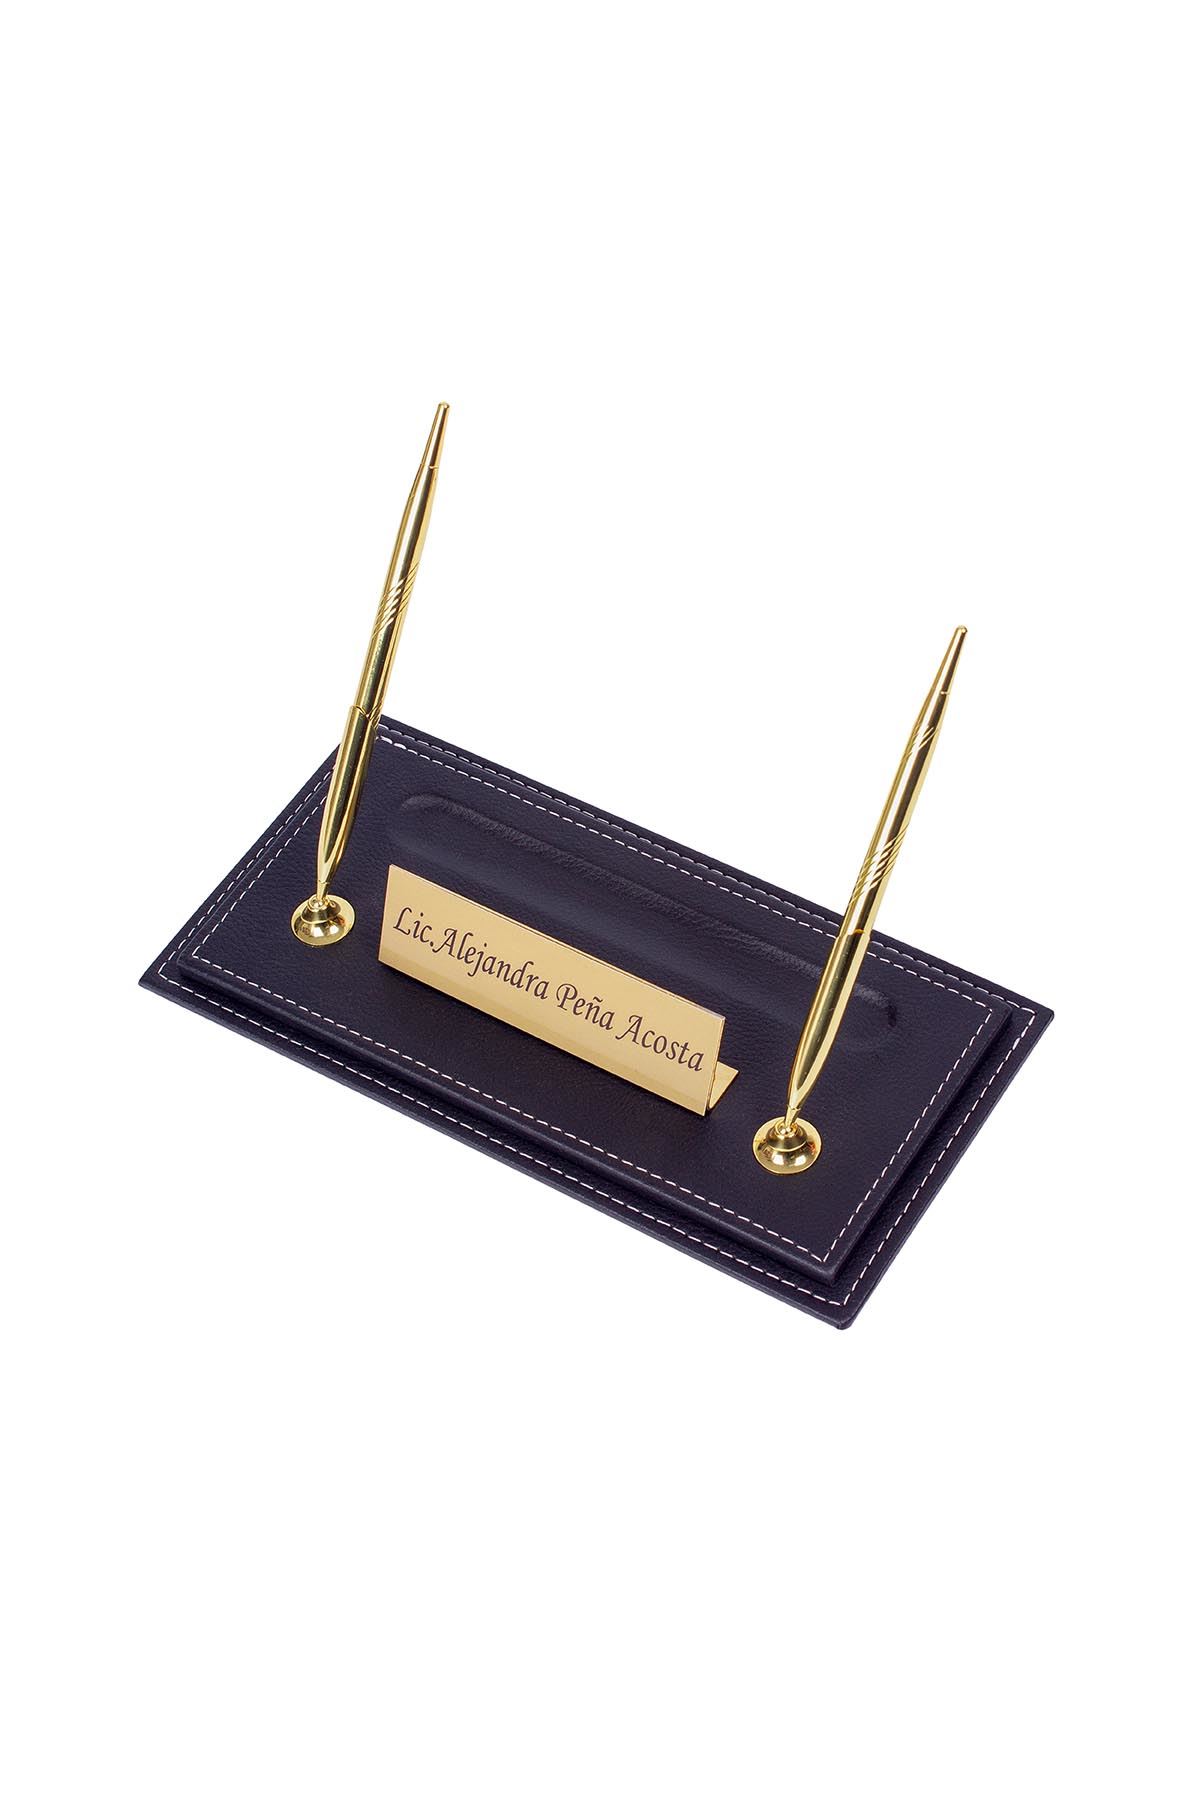 Leather Manager Pen Base | Name Plate | Golden Pen Base | Desk Accessories